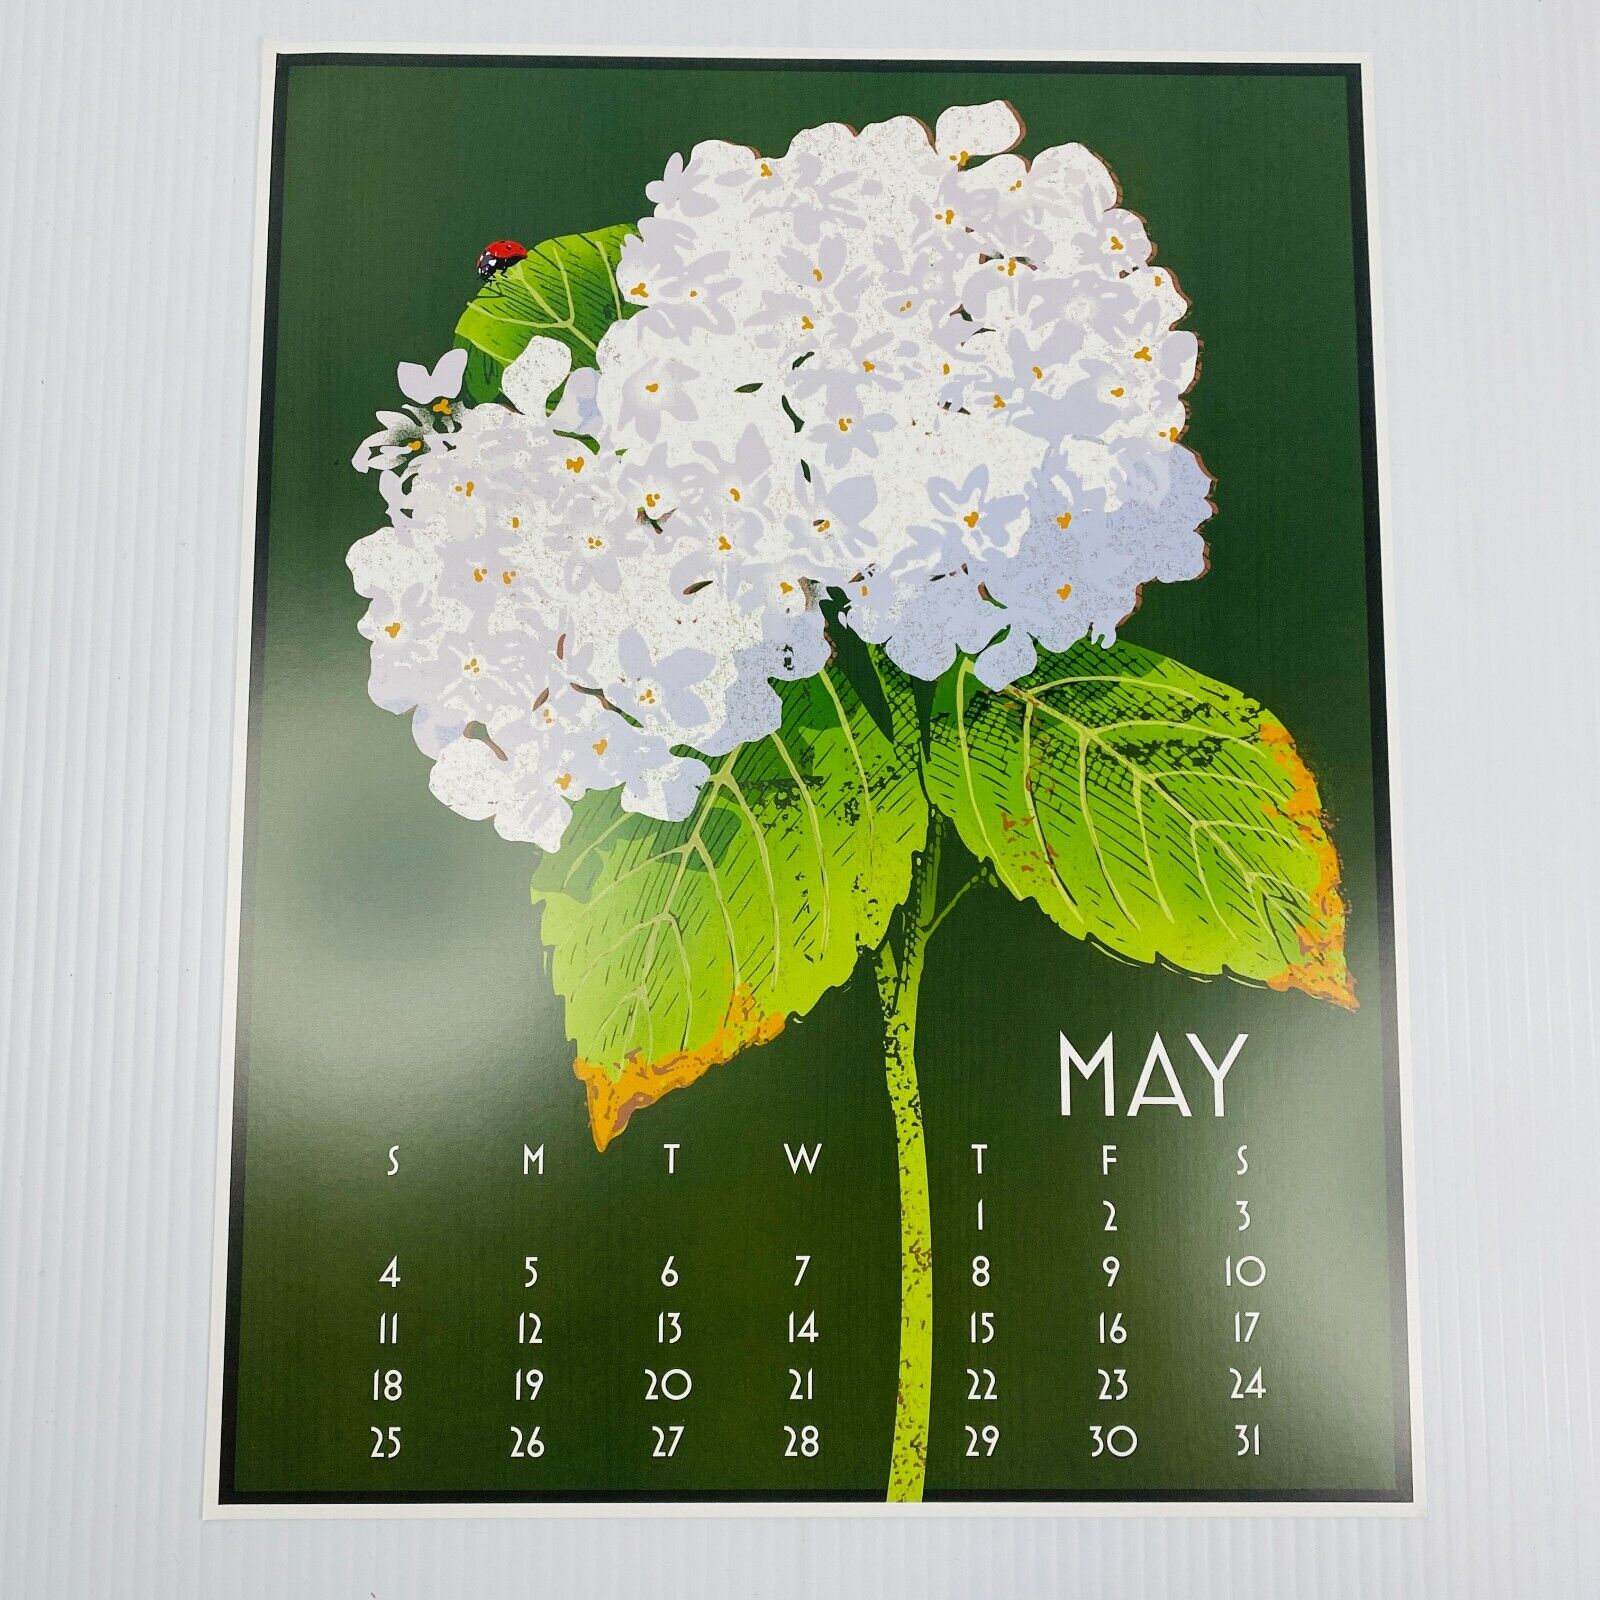 2014 Linnea Poster Calendar 11x14 Replacement Month: MAY Art Print White Flowers